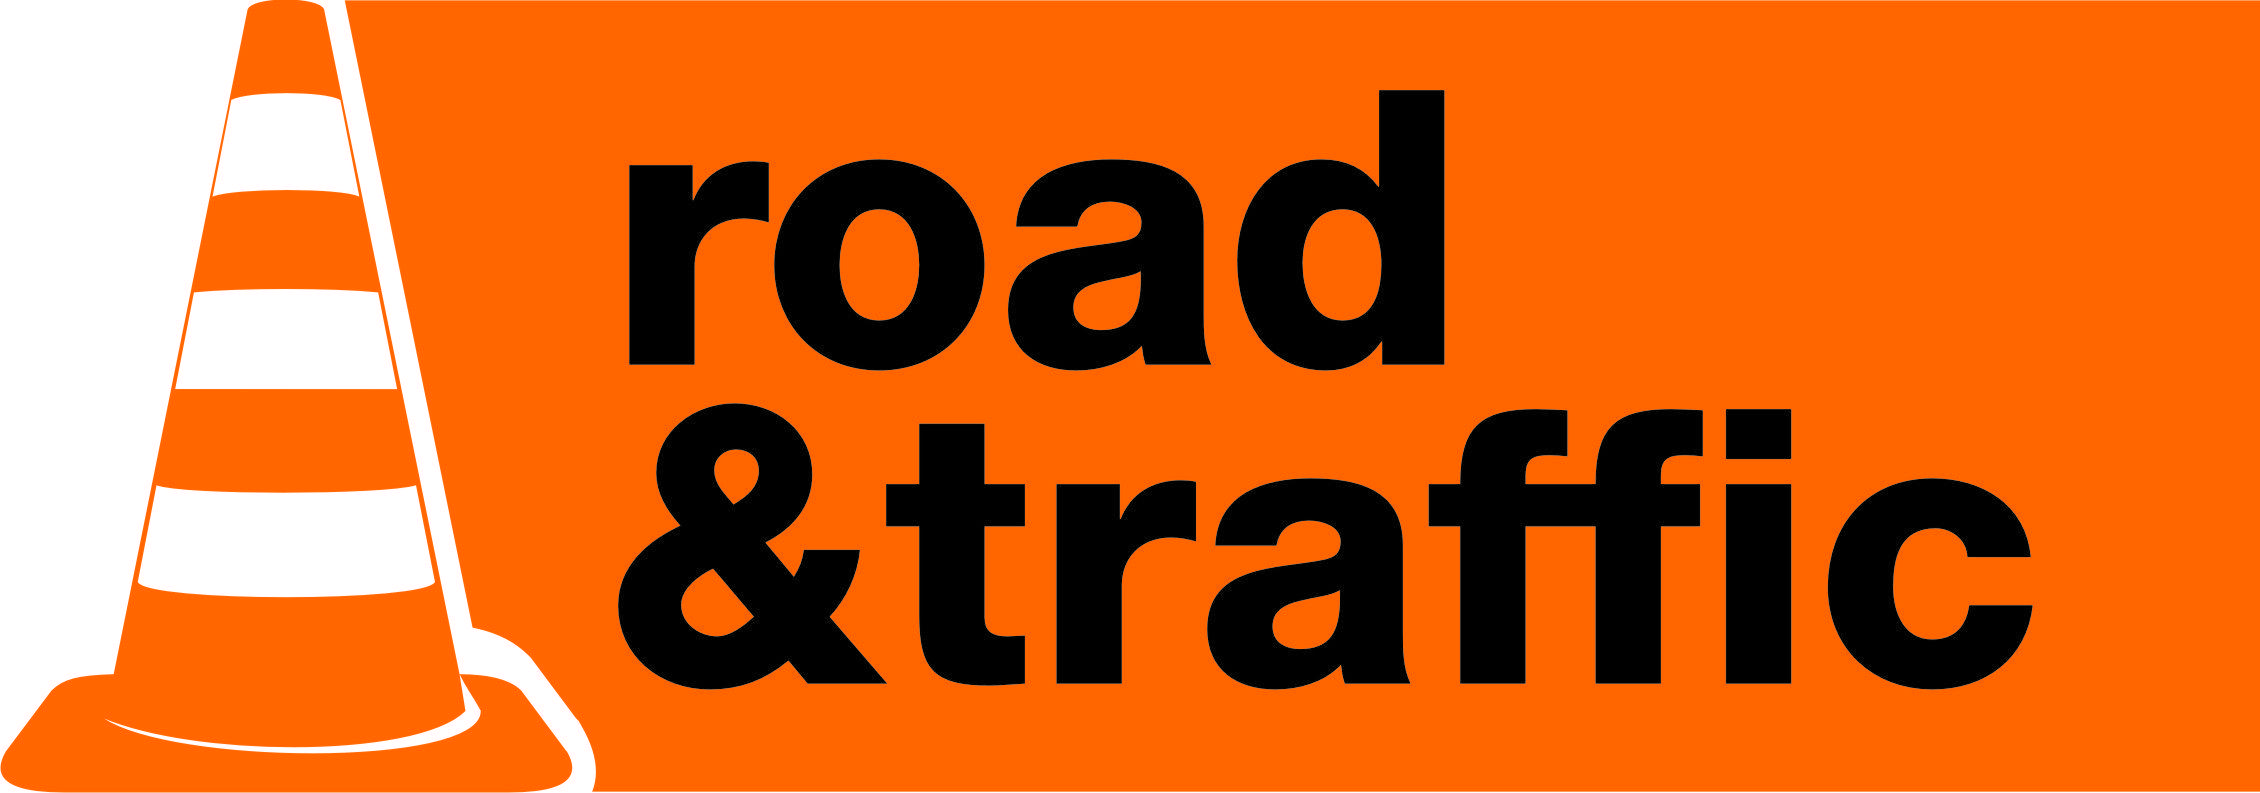 Traffic Logo - Road & Traffic Azerbaijan 2014 : Download Logos